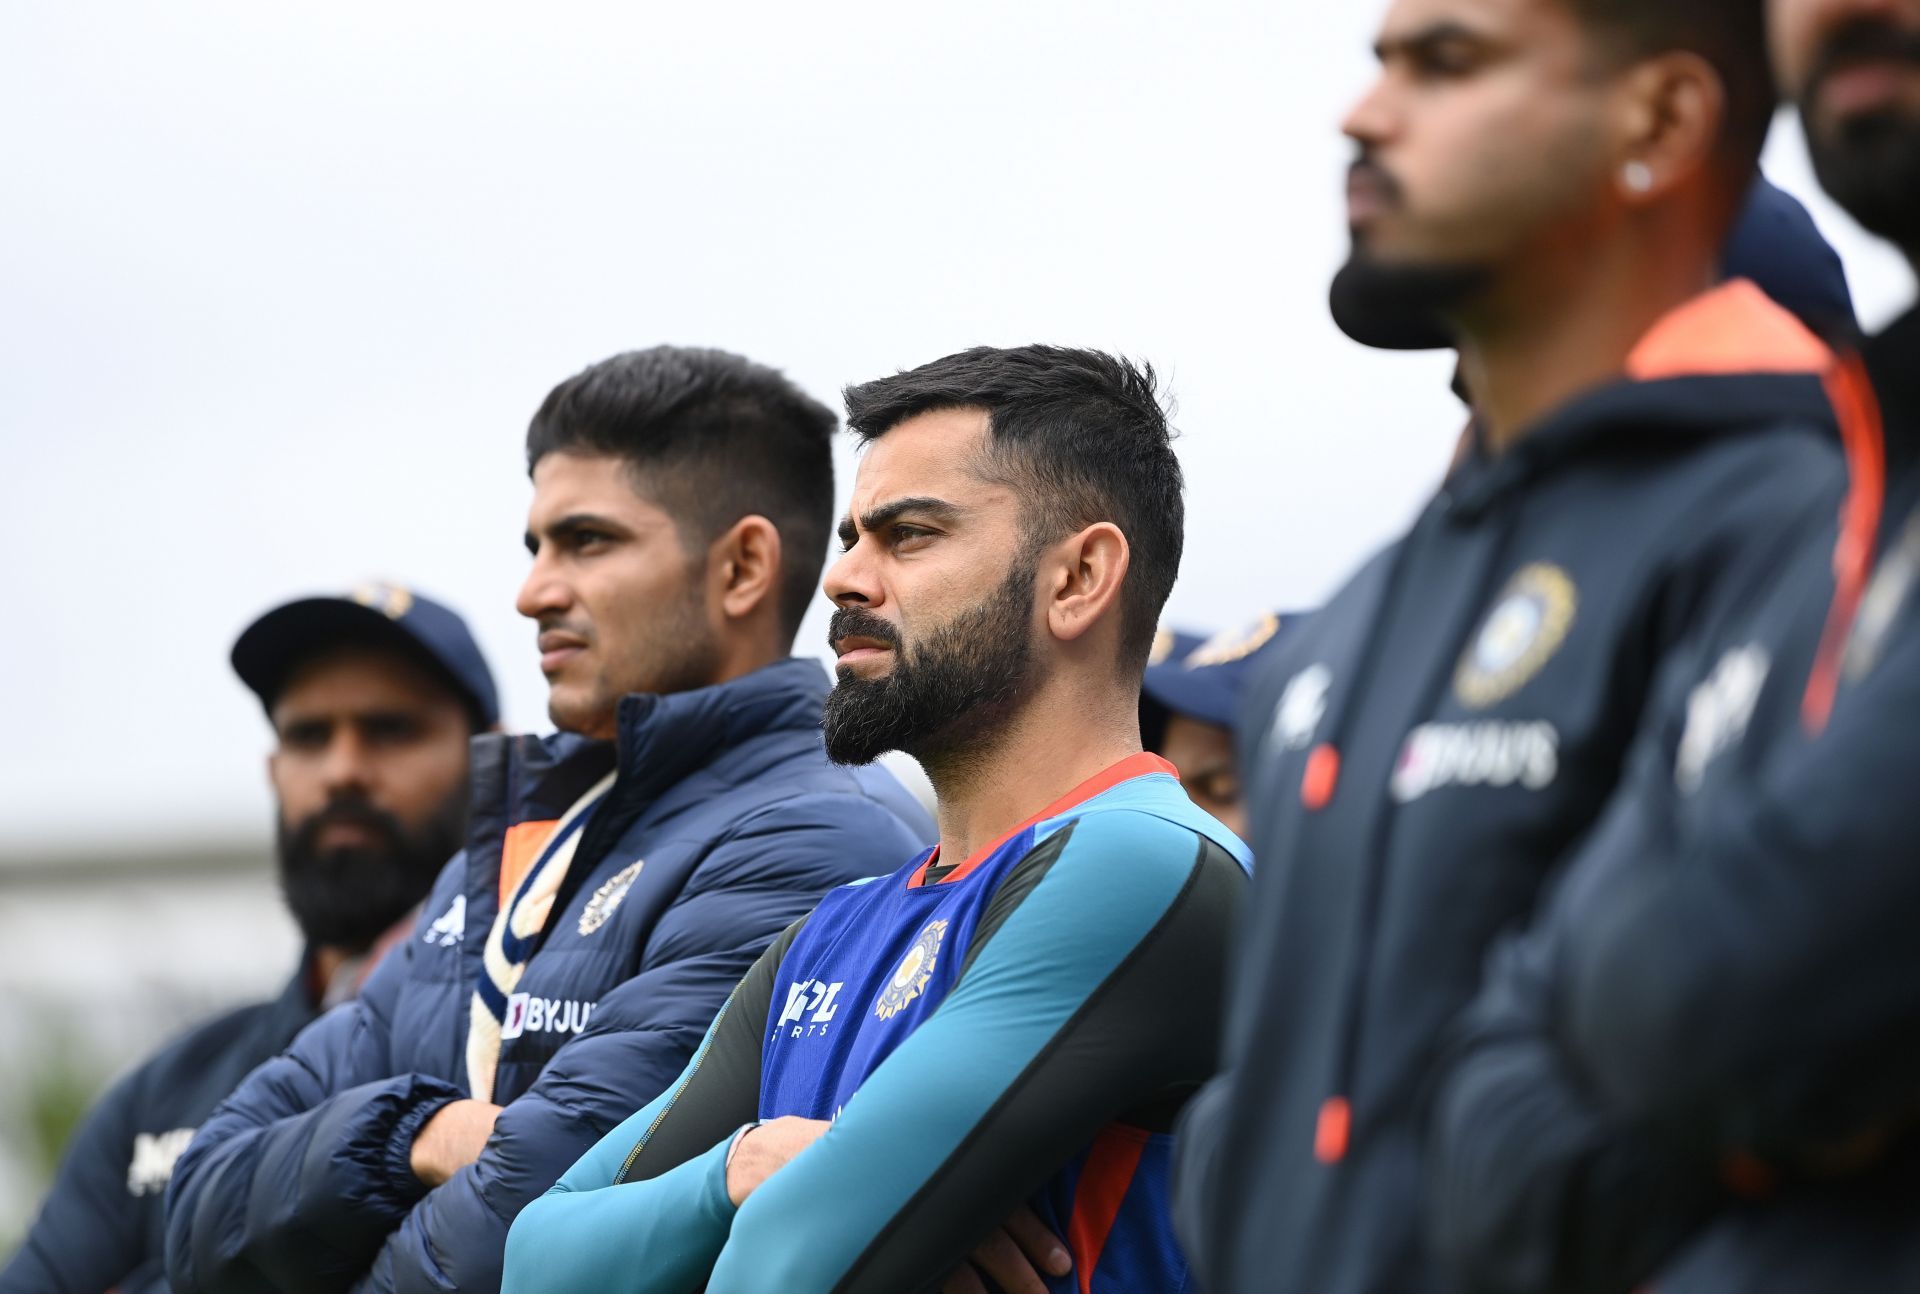 India failed to defend 378 runs against England at Edgbaston